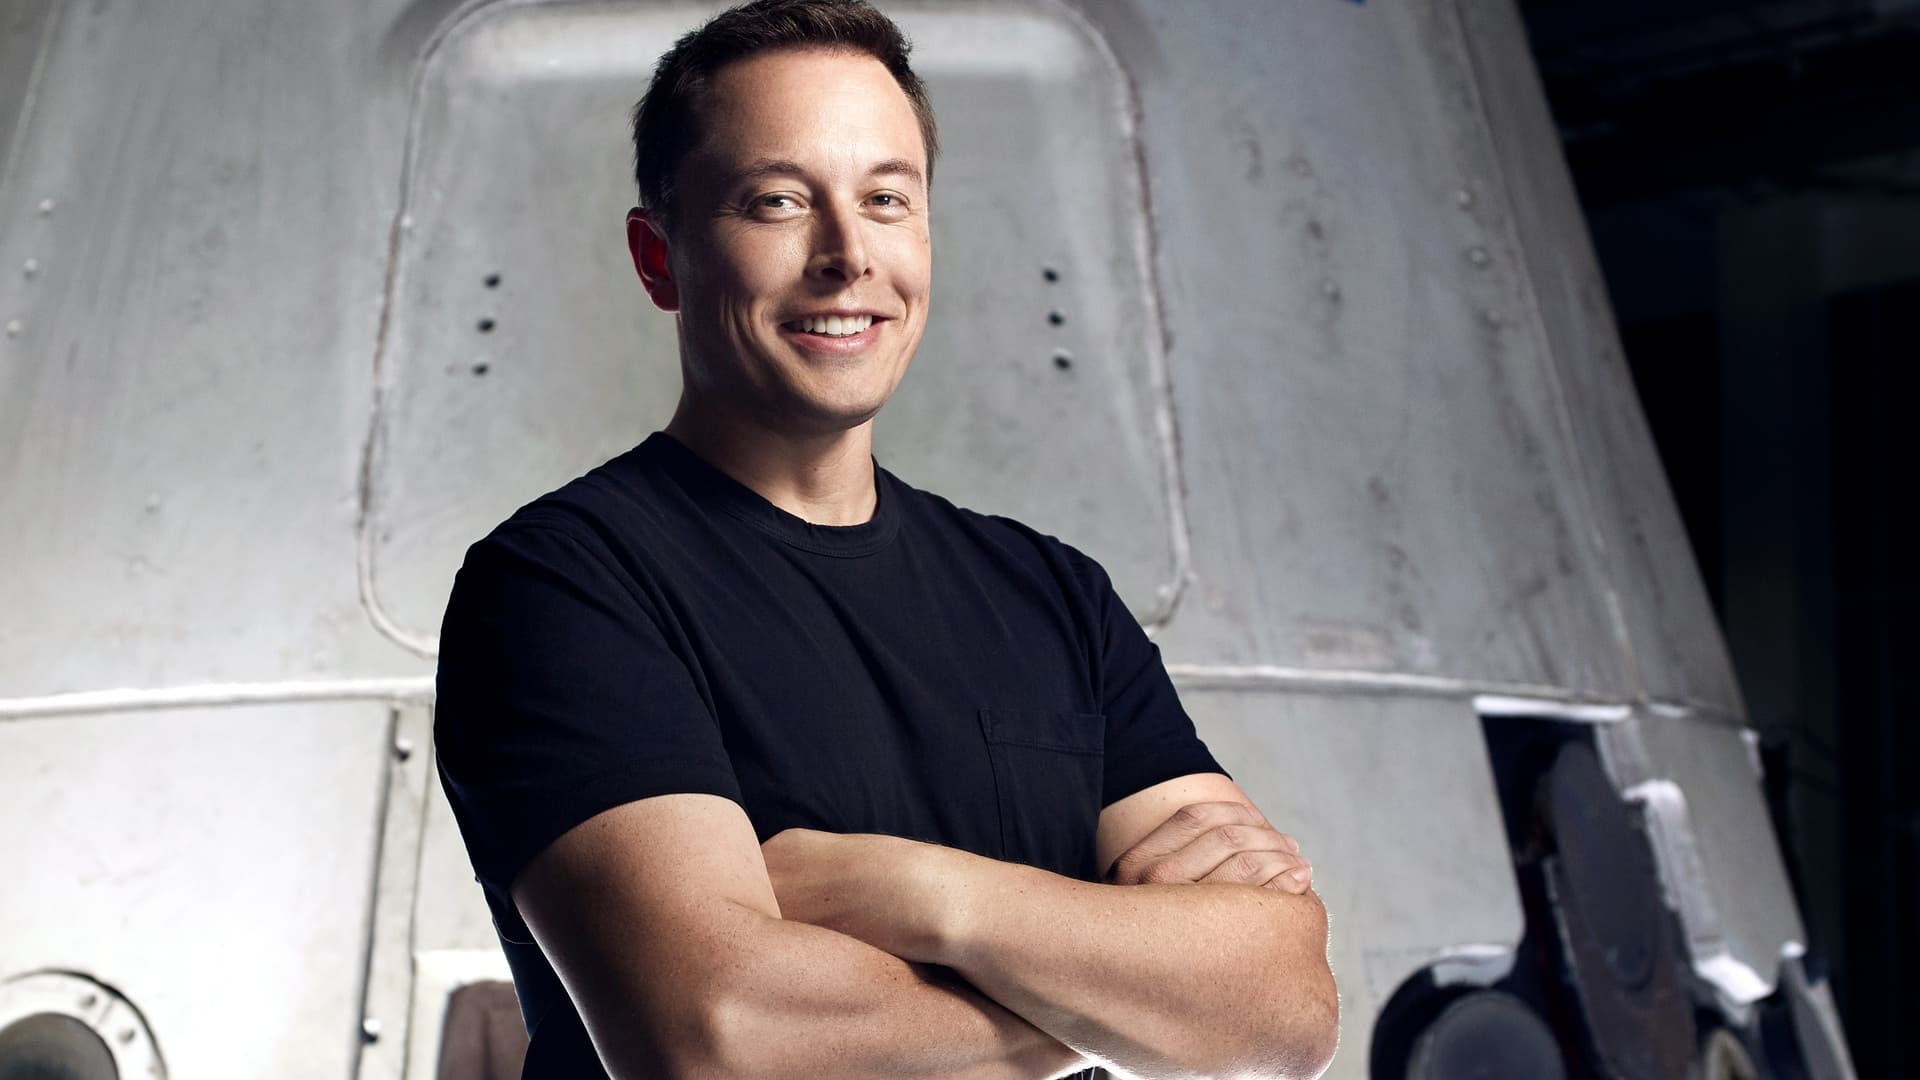 دانلود مستند Tech Billionaires: Elon Musk 2021